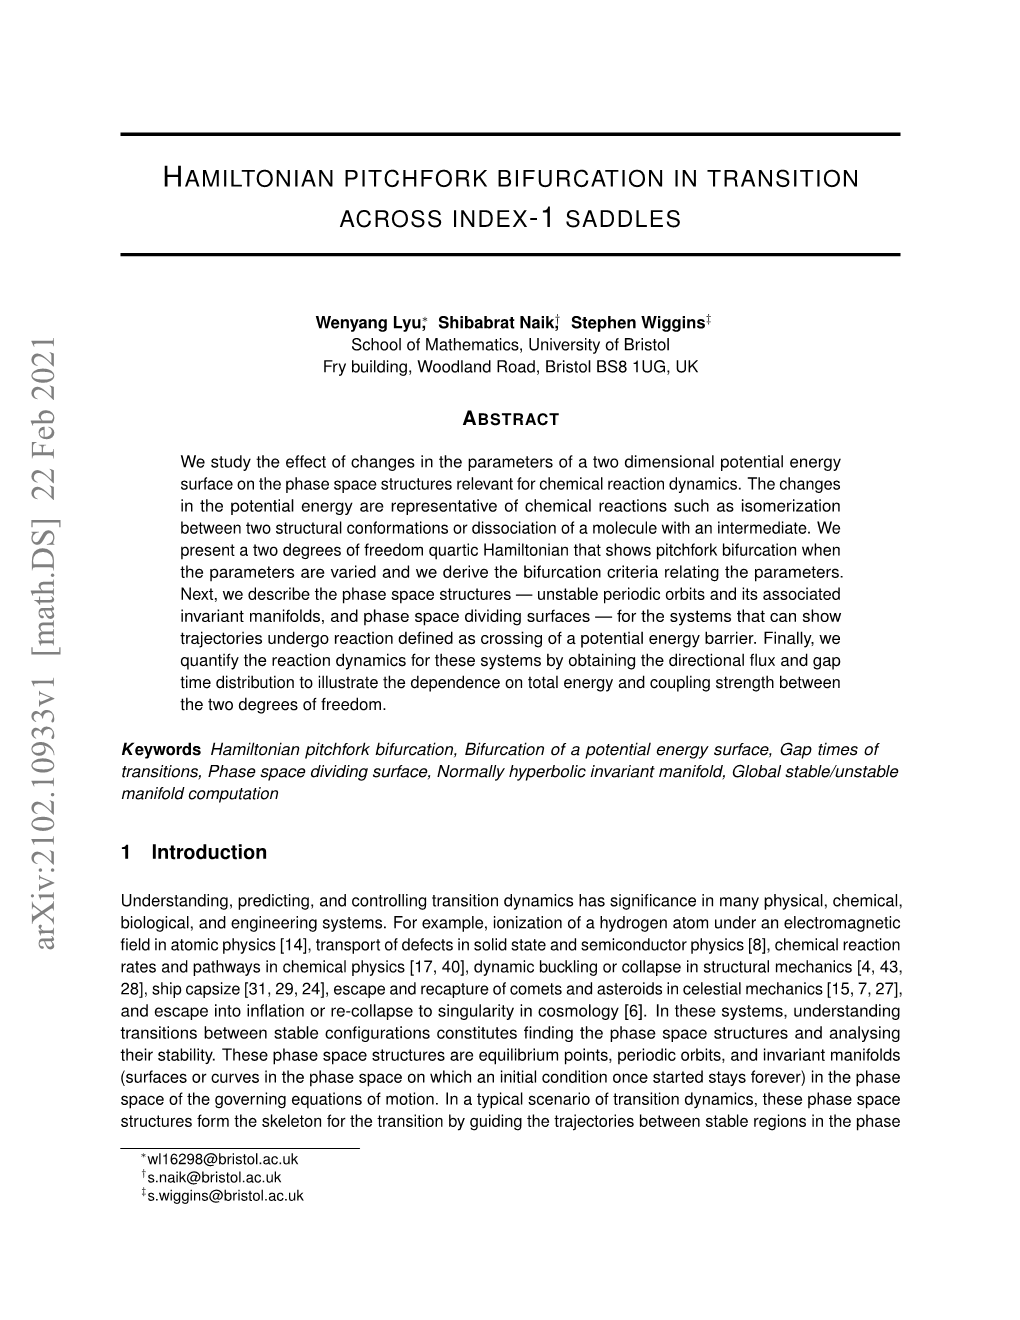 Hamiltonian Pitchfork Bifurcation in Transition